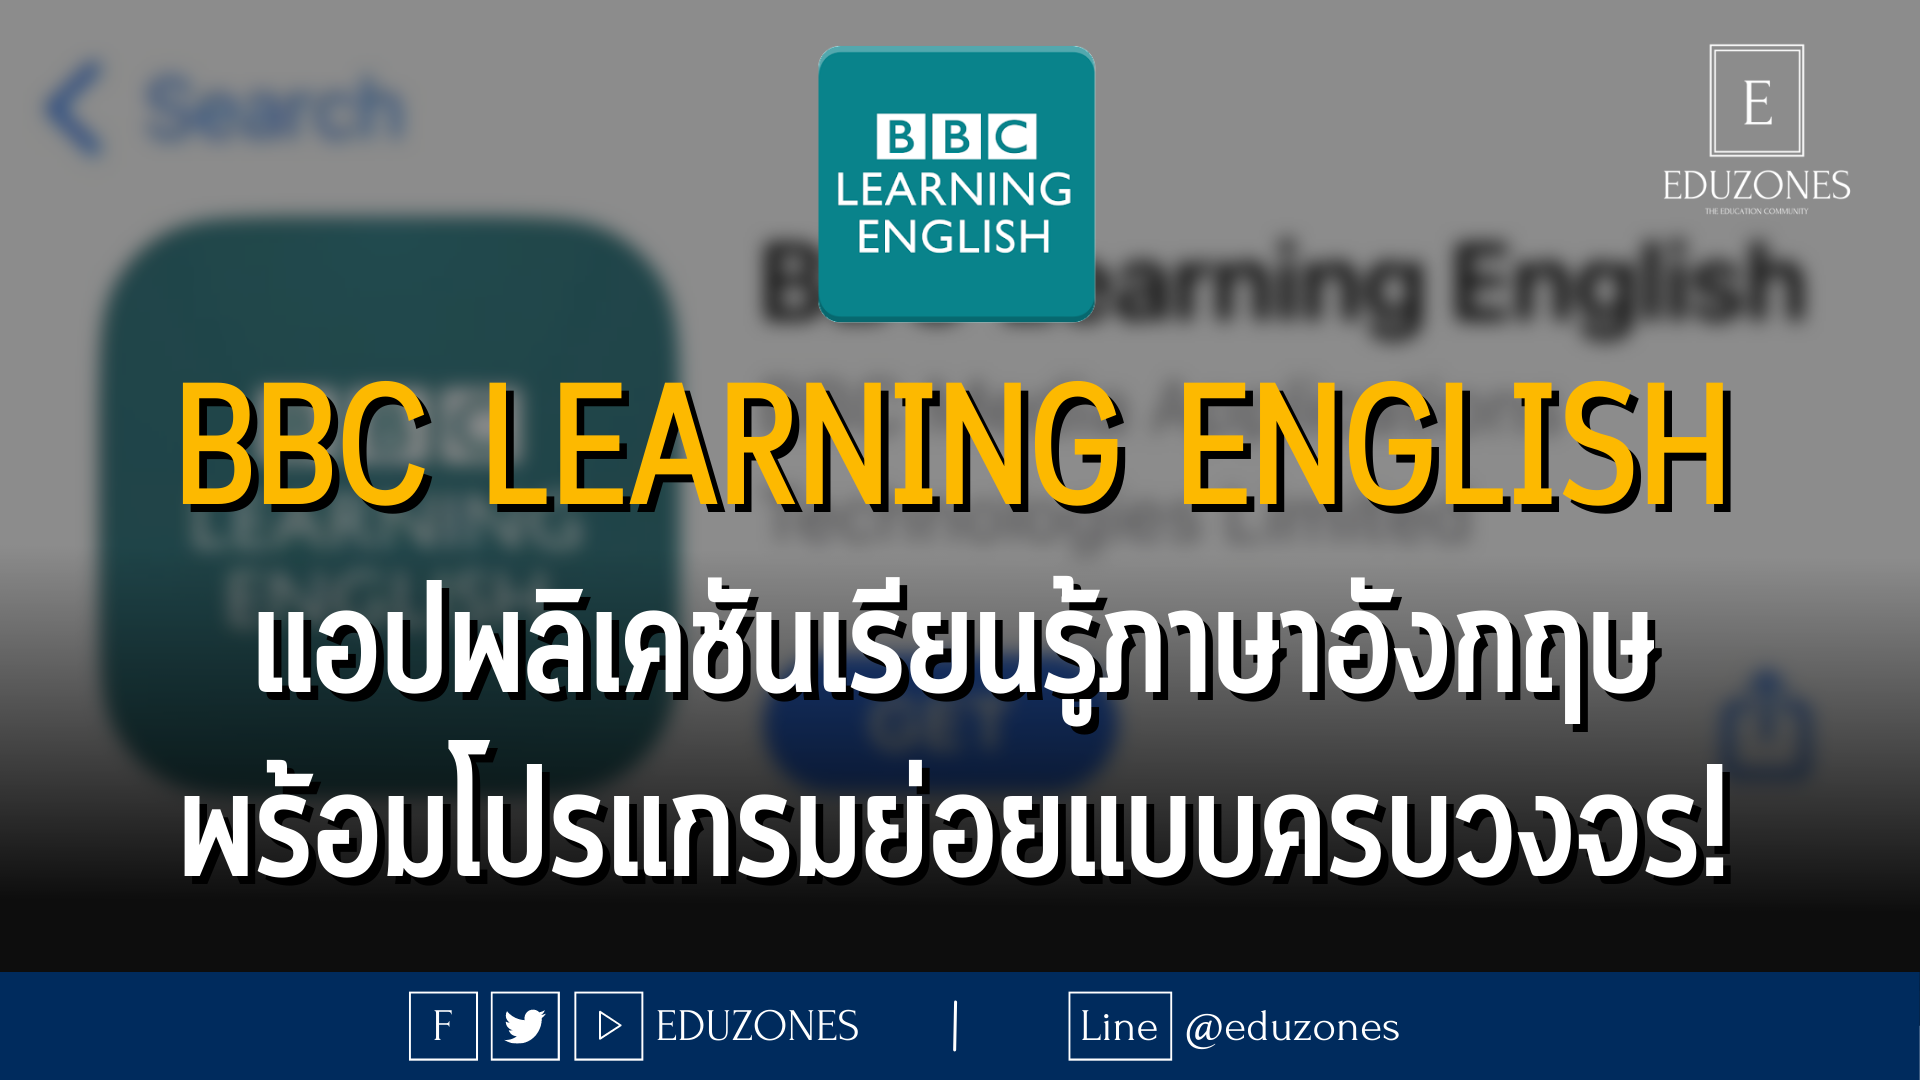 BBC LEARNING ENGLISH : แอปพลิเคชันเรียนรู้ภาษาอังกฤษ พร้อมโปรแกรมย่อยแบบครบวงจร!